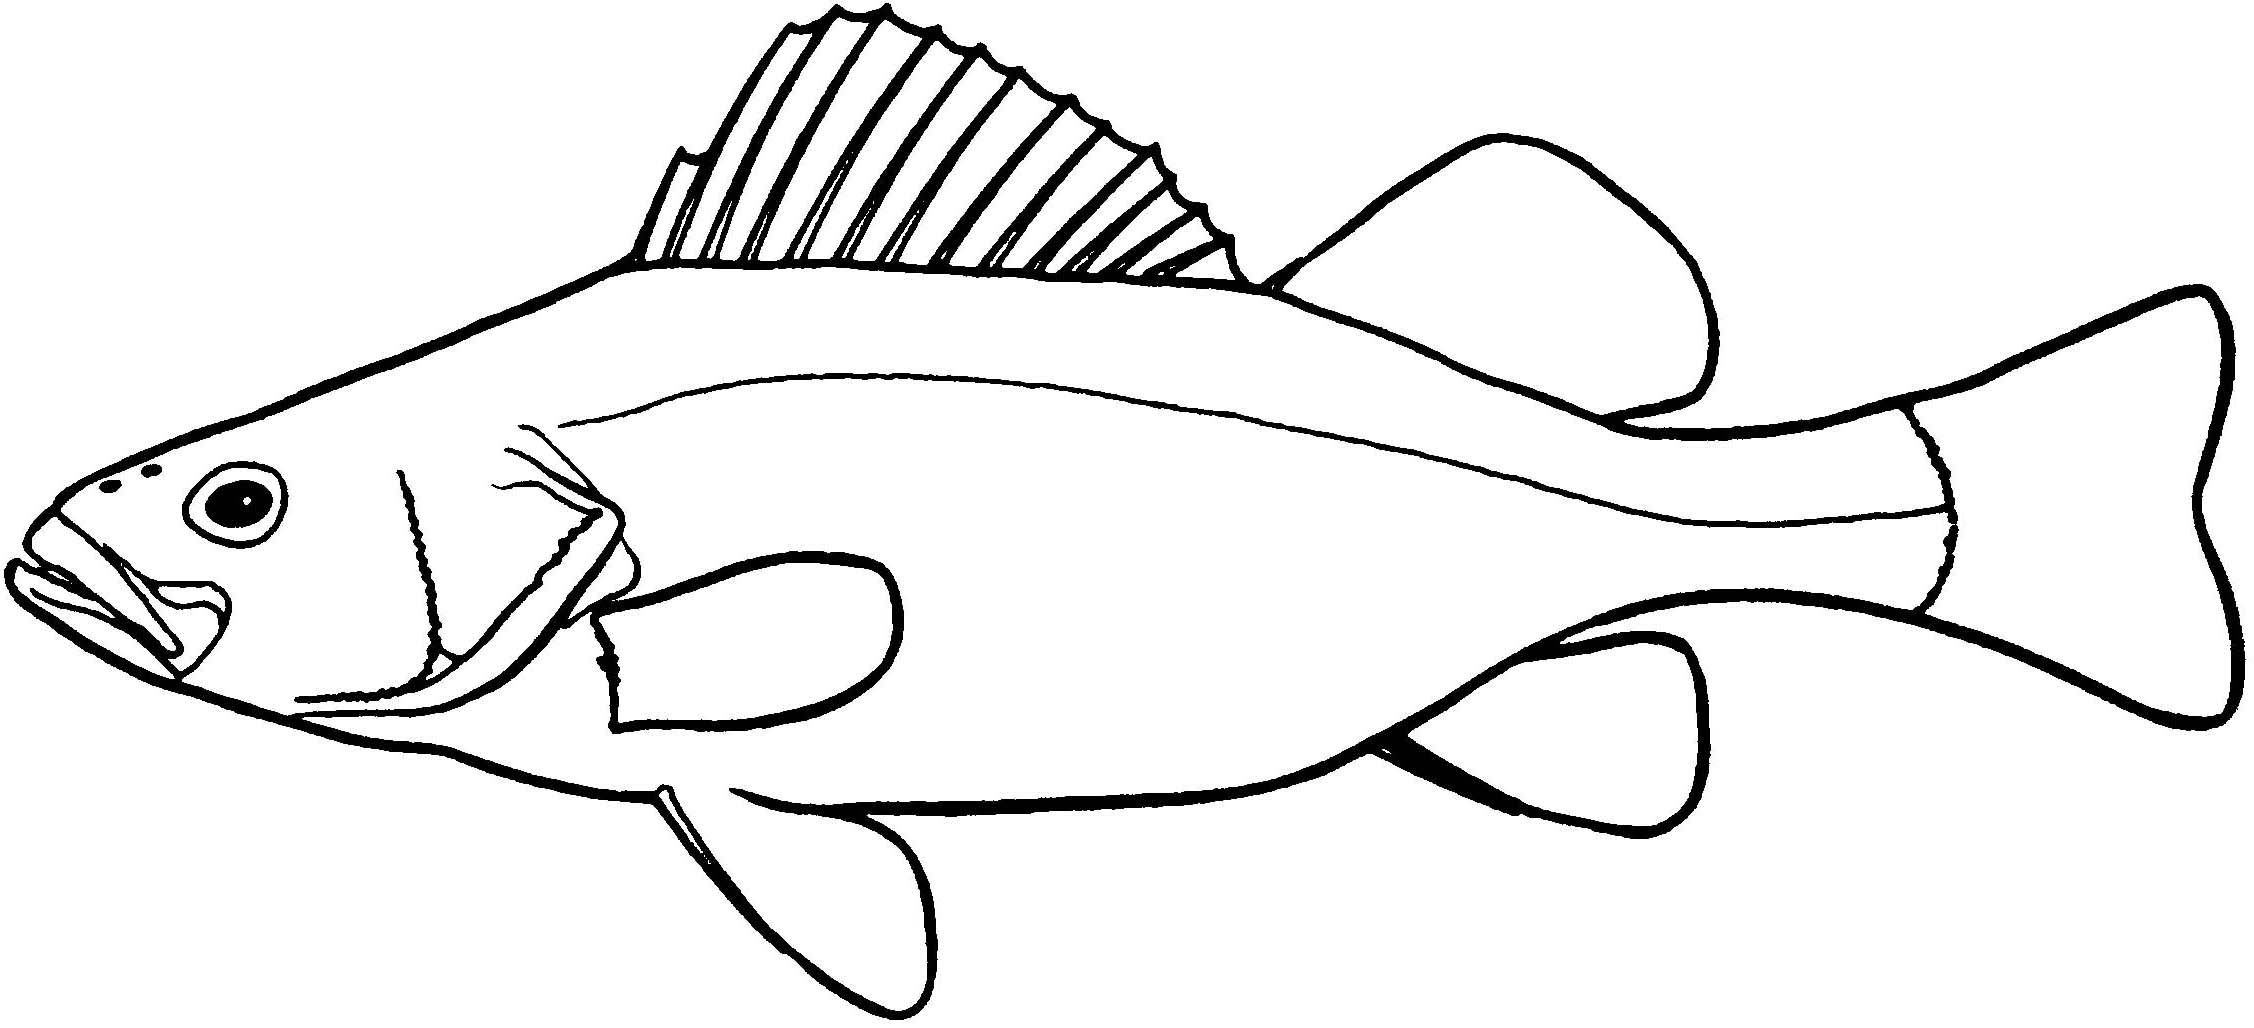 Salmon Fish Drawing